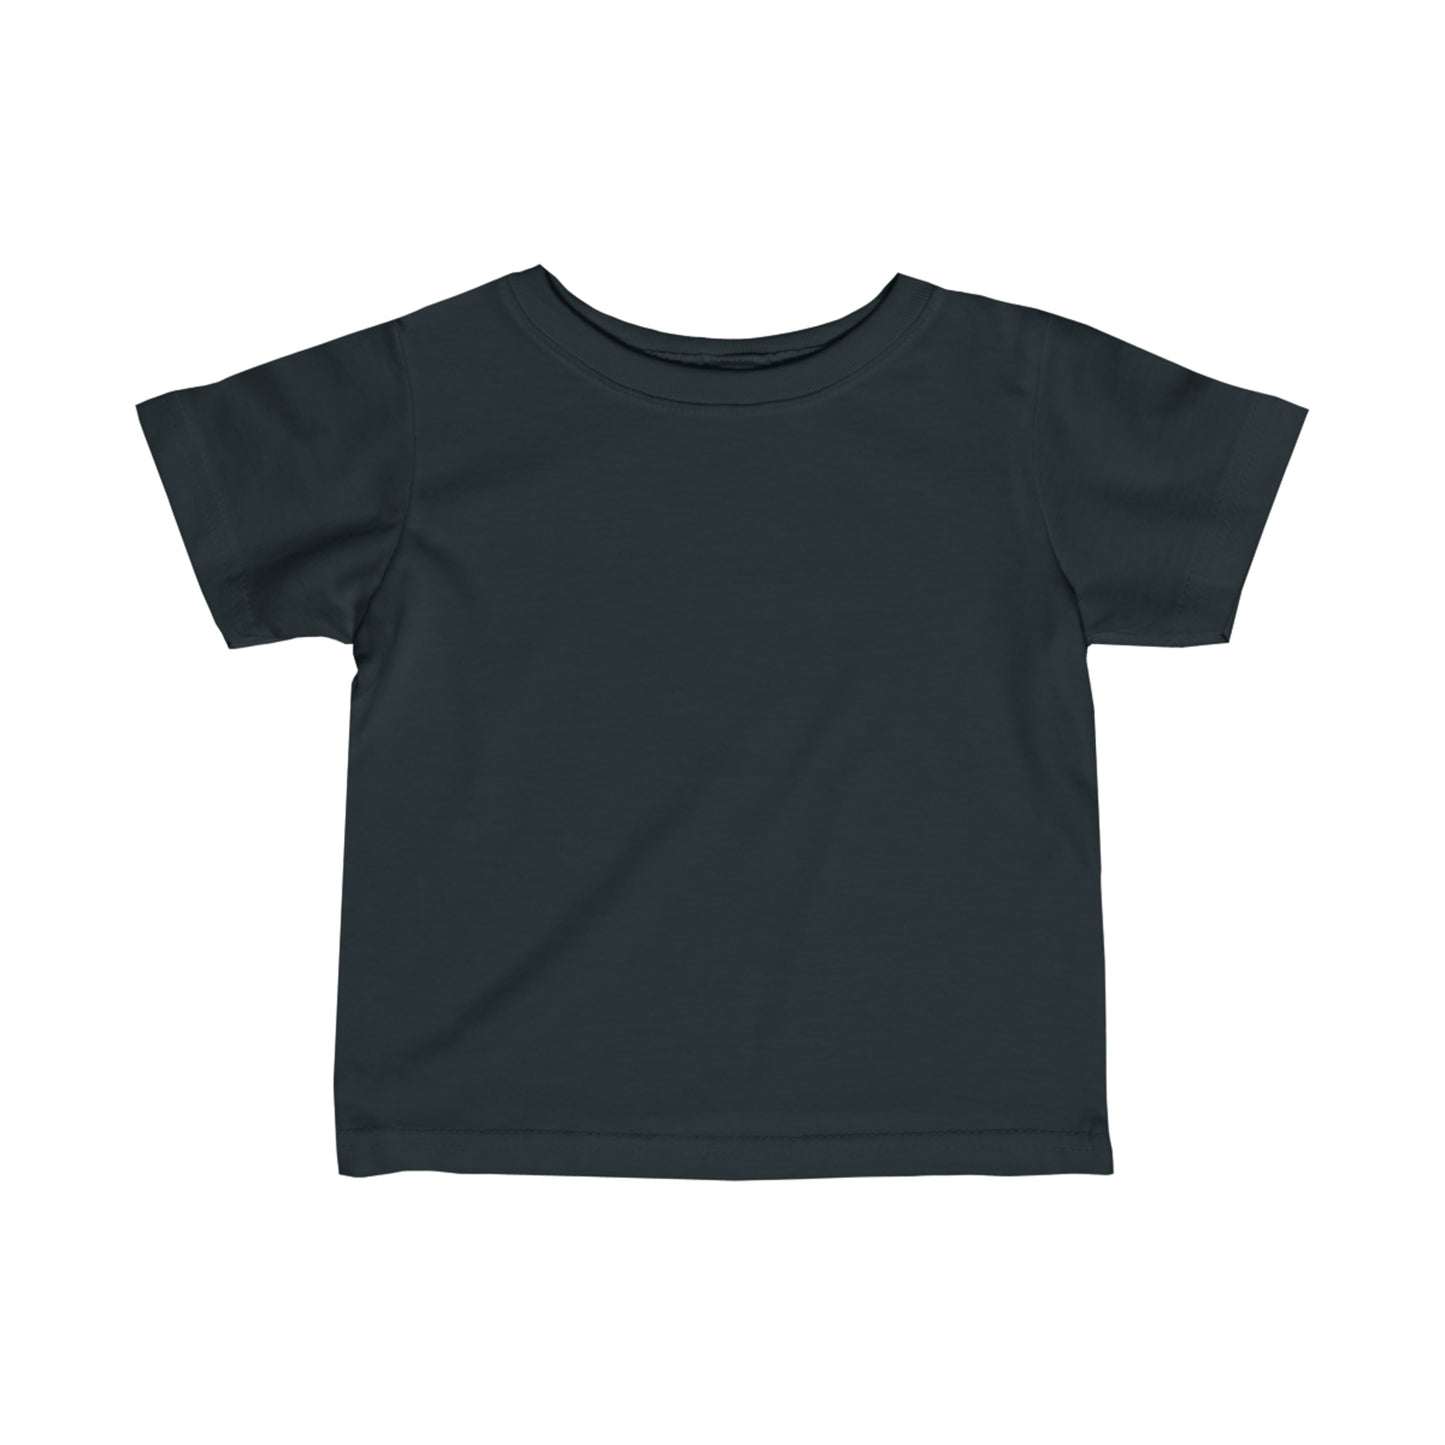 Unisex Printed Short Sleeve T-Shirt for 6m-24m